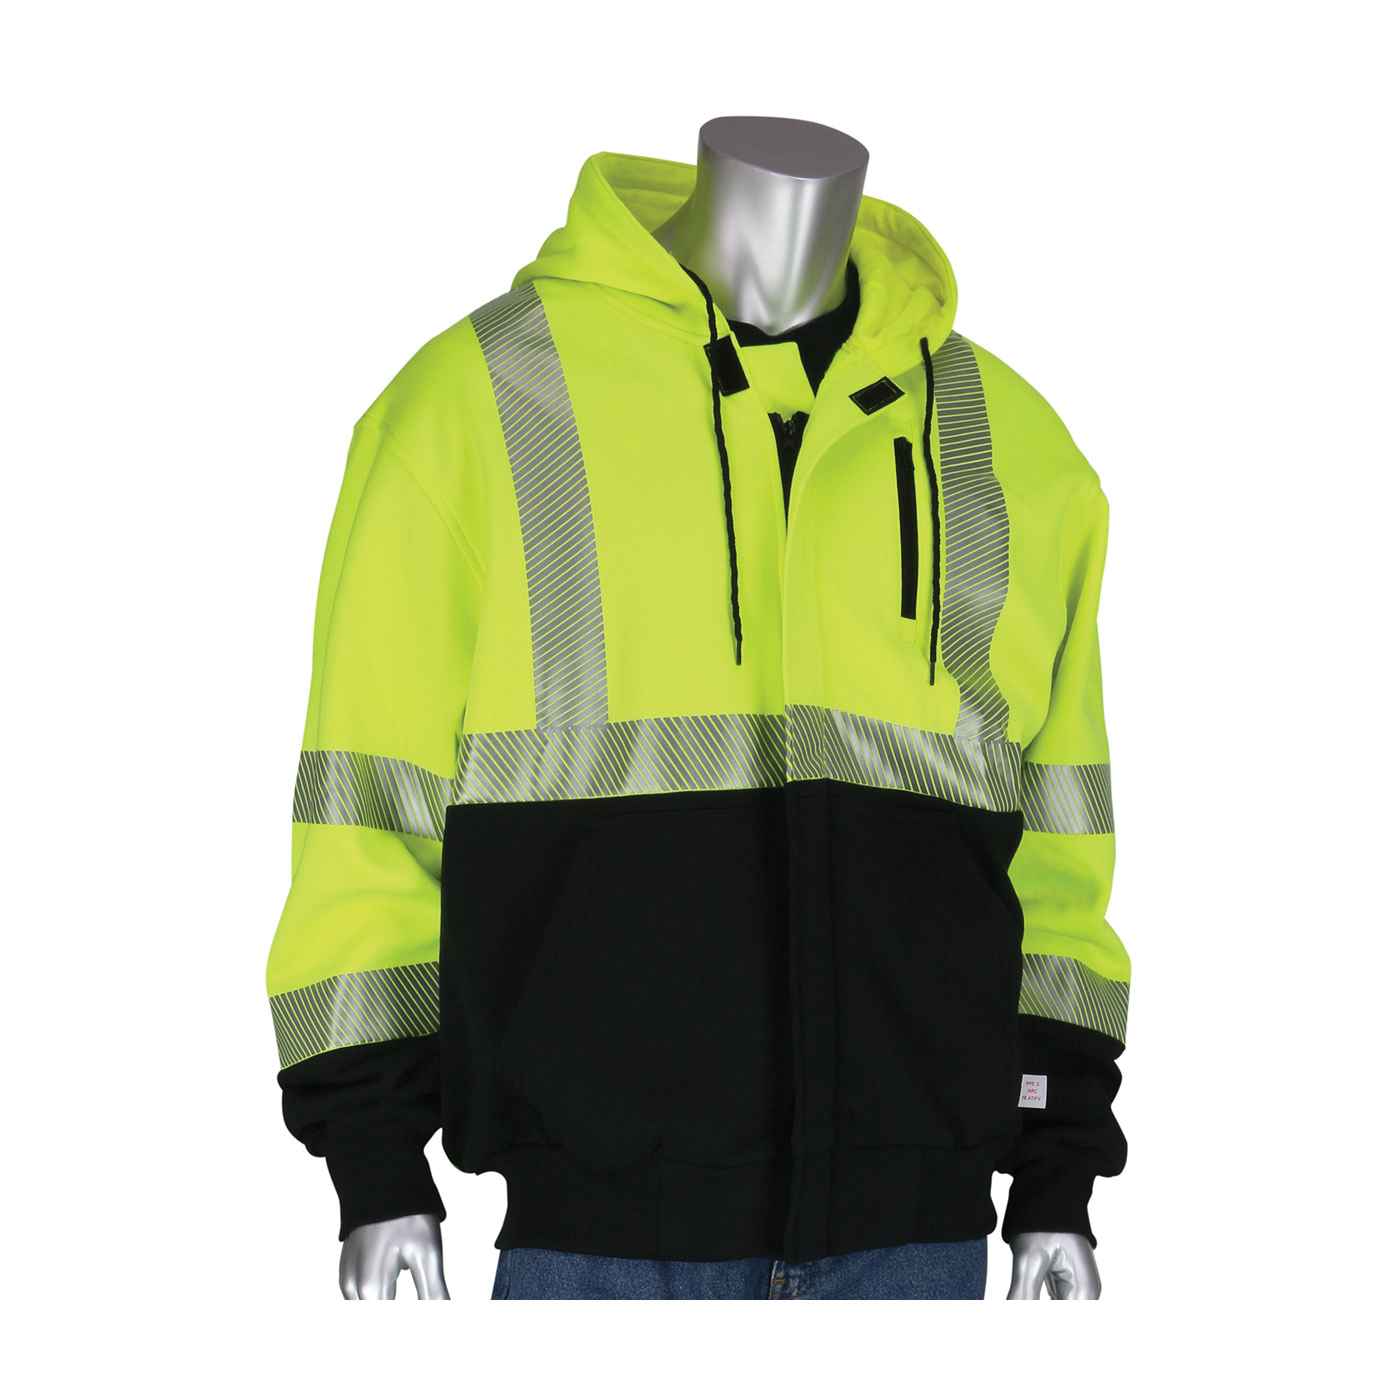 PIP® 385-1370FR-LY/L 385-1370FR Arc and Flame Resistant Hooded Sweatshirt With Black Bottom, Unisex, L, Hi-Viz Yellow/Black, 60% Modacrylic/40% Cotton, 29-1/2 in L